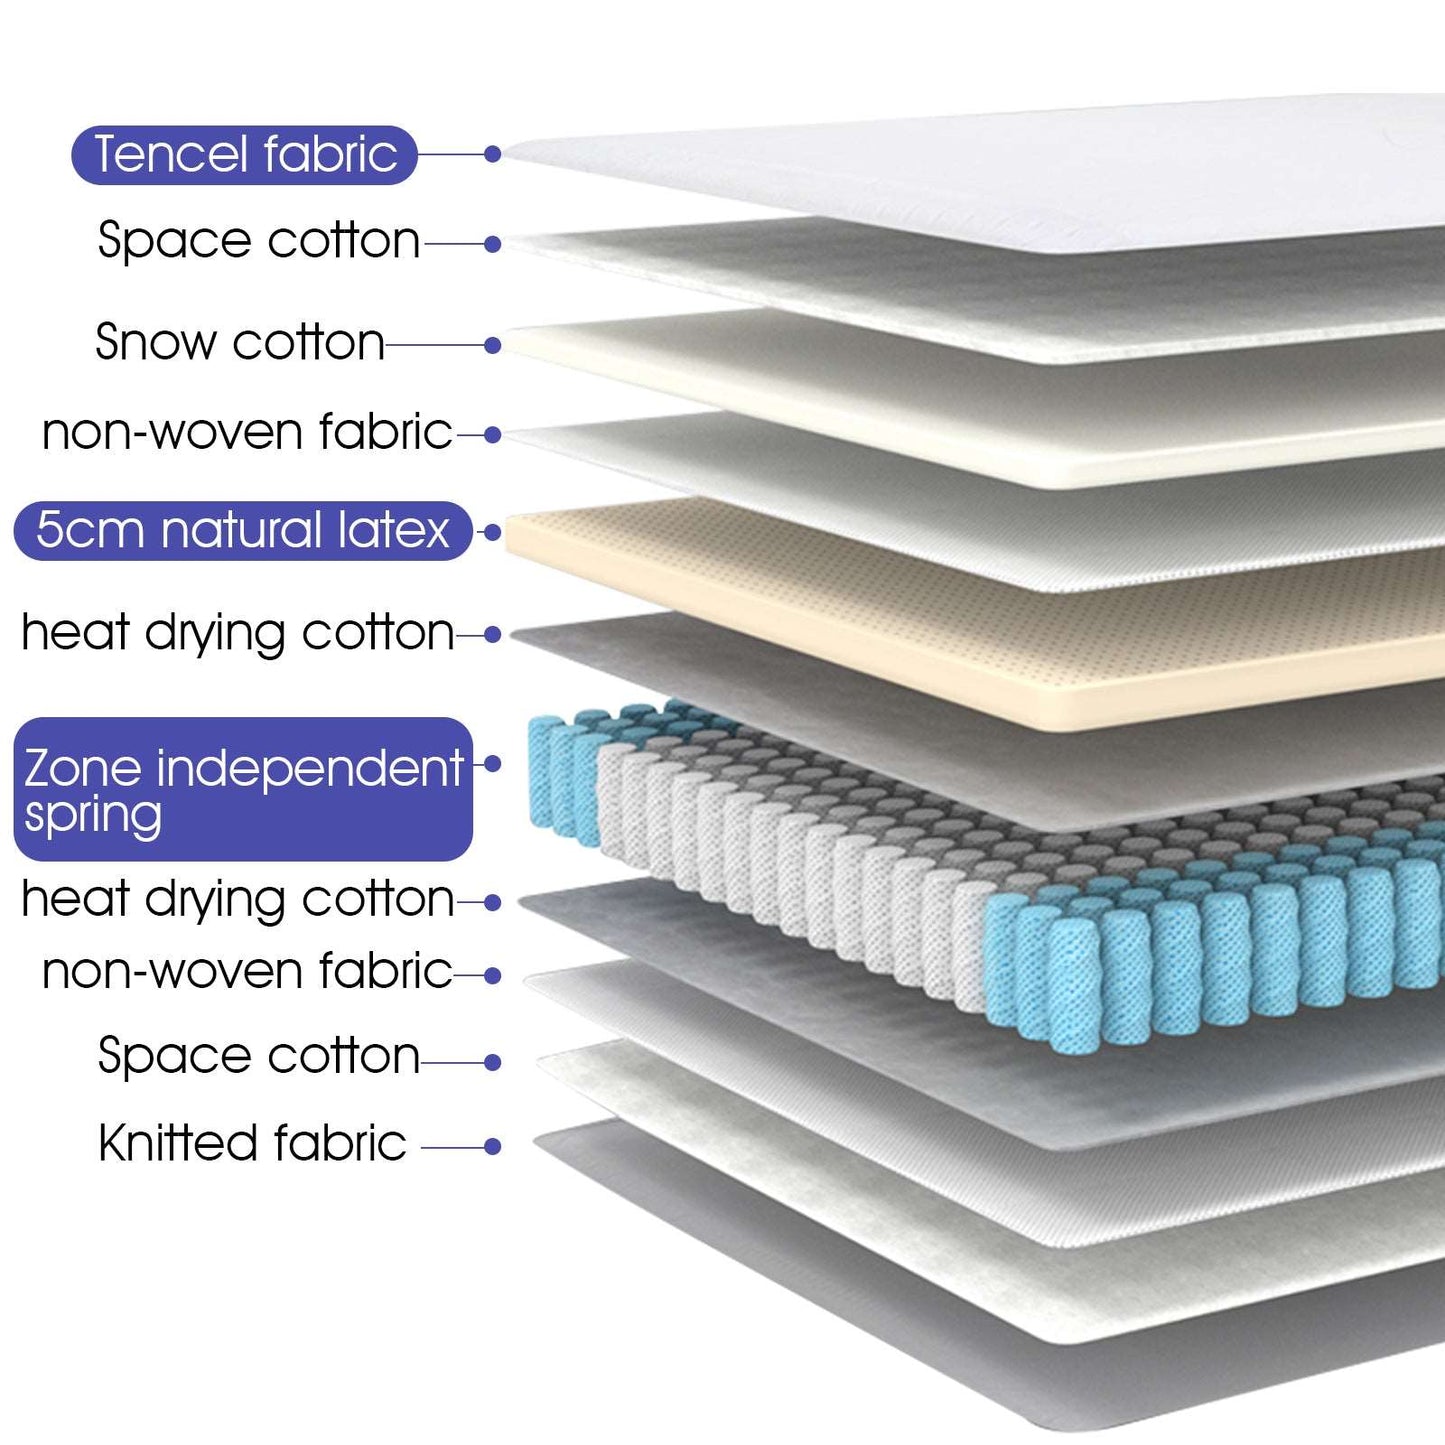 10 Inches Gel Memory Foam Mattress Medium Firmness